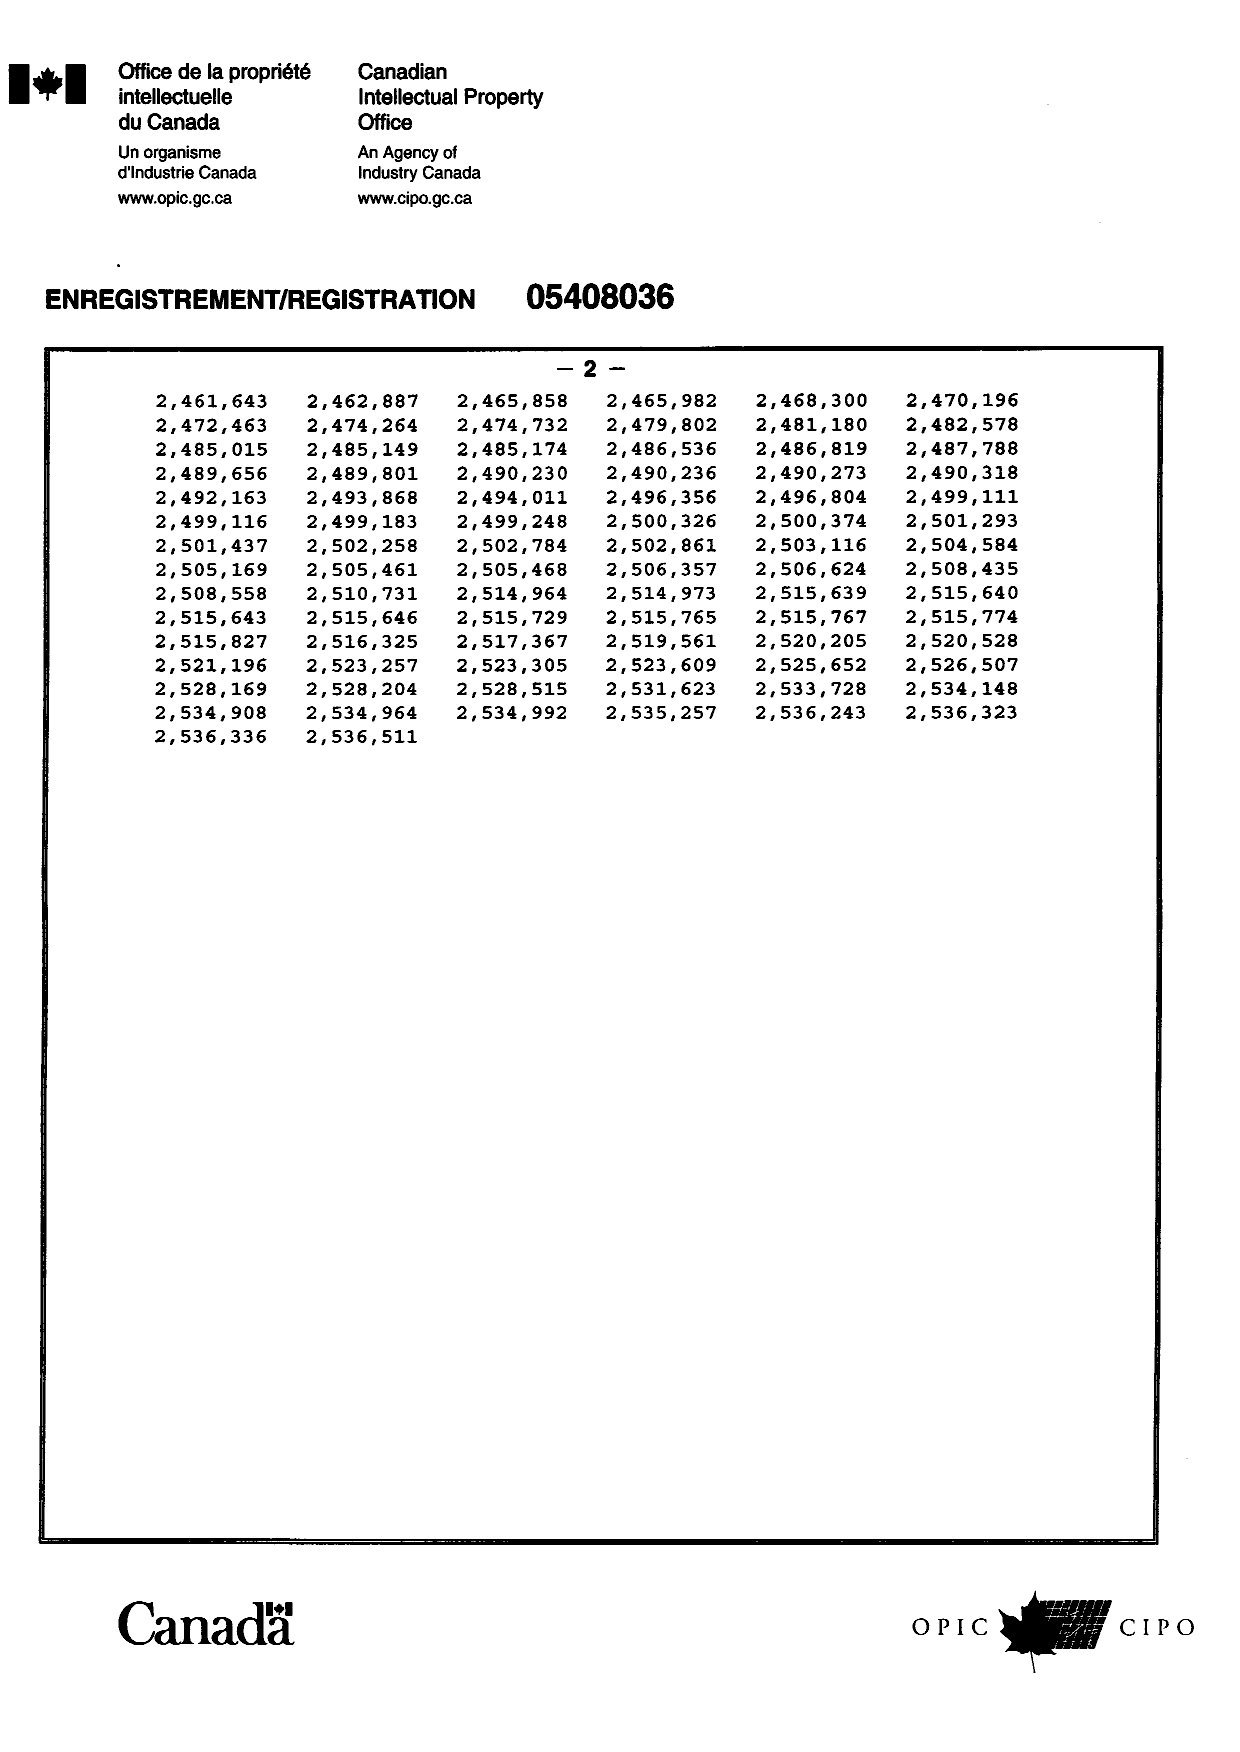 Canadian Patent Document 2521196. Correspondence 20061229. Image 3 of 3